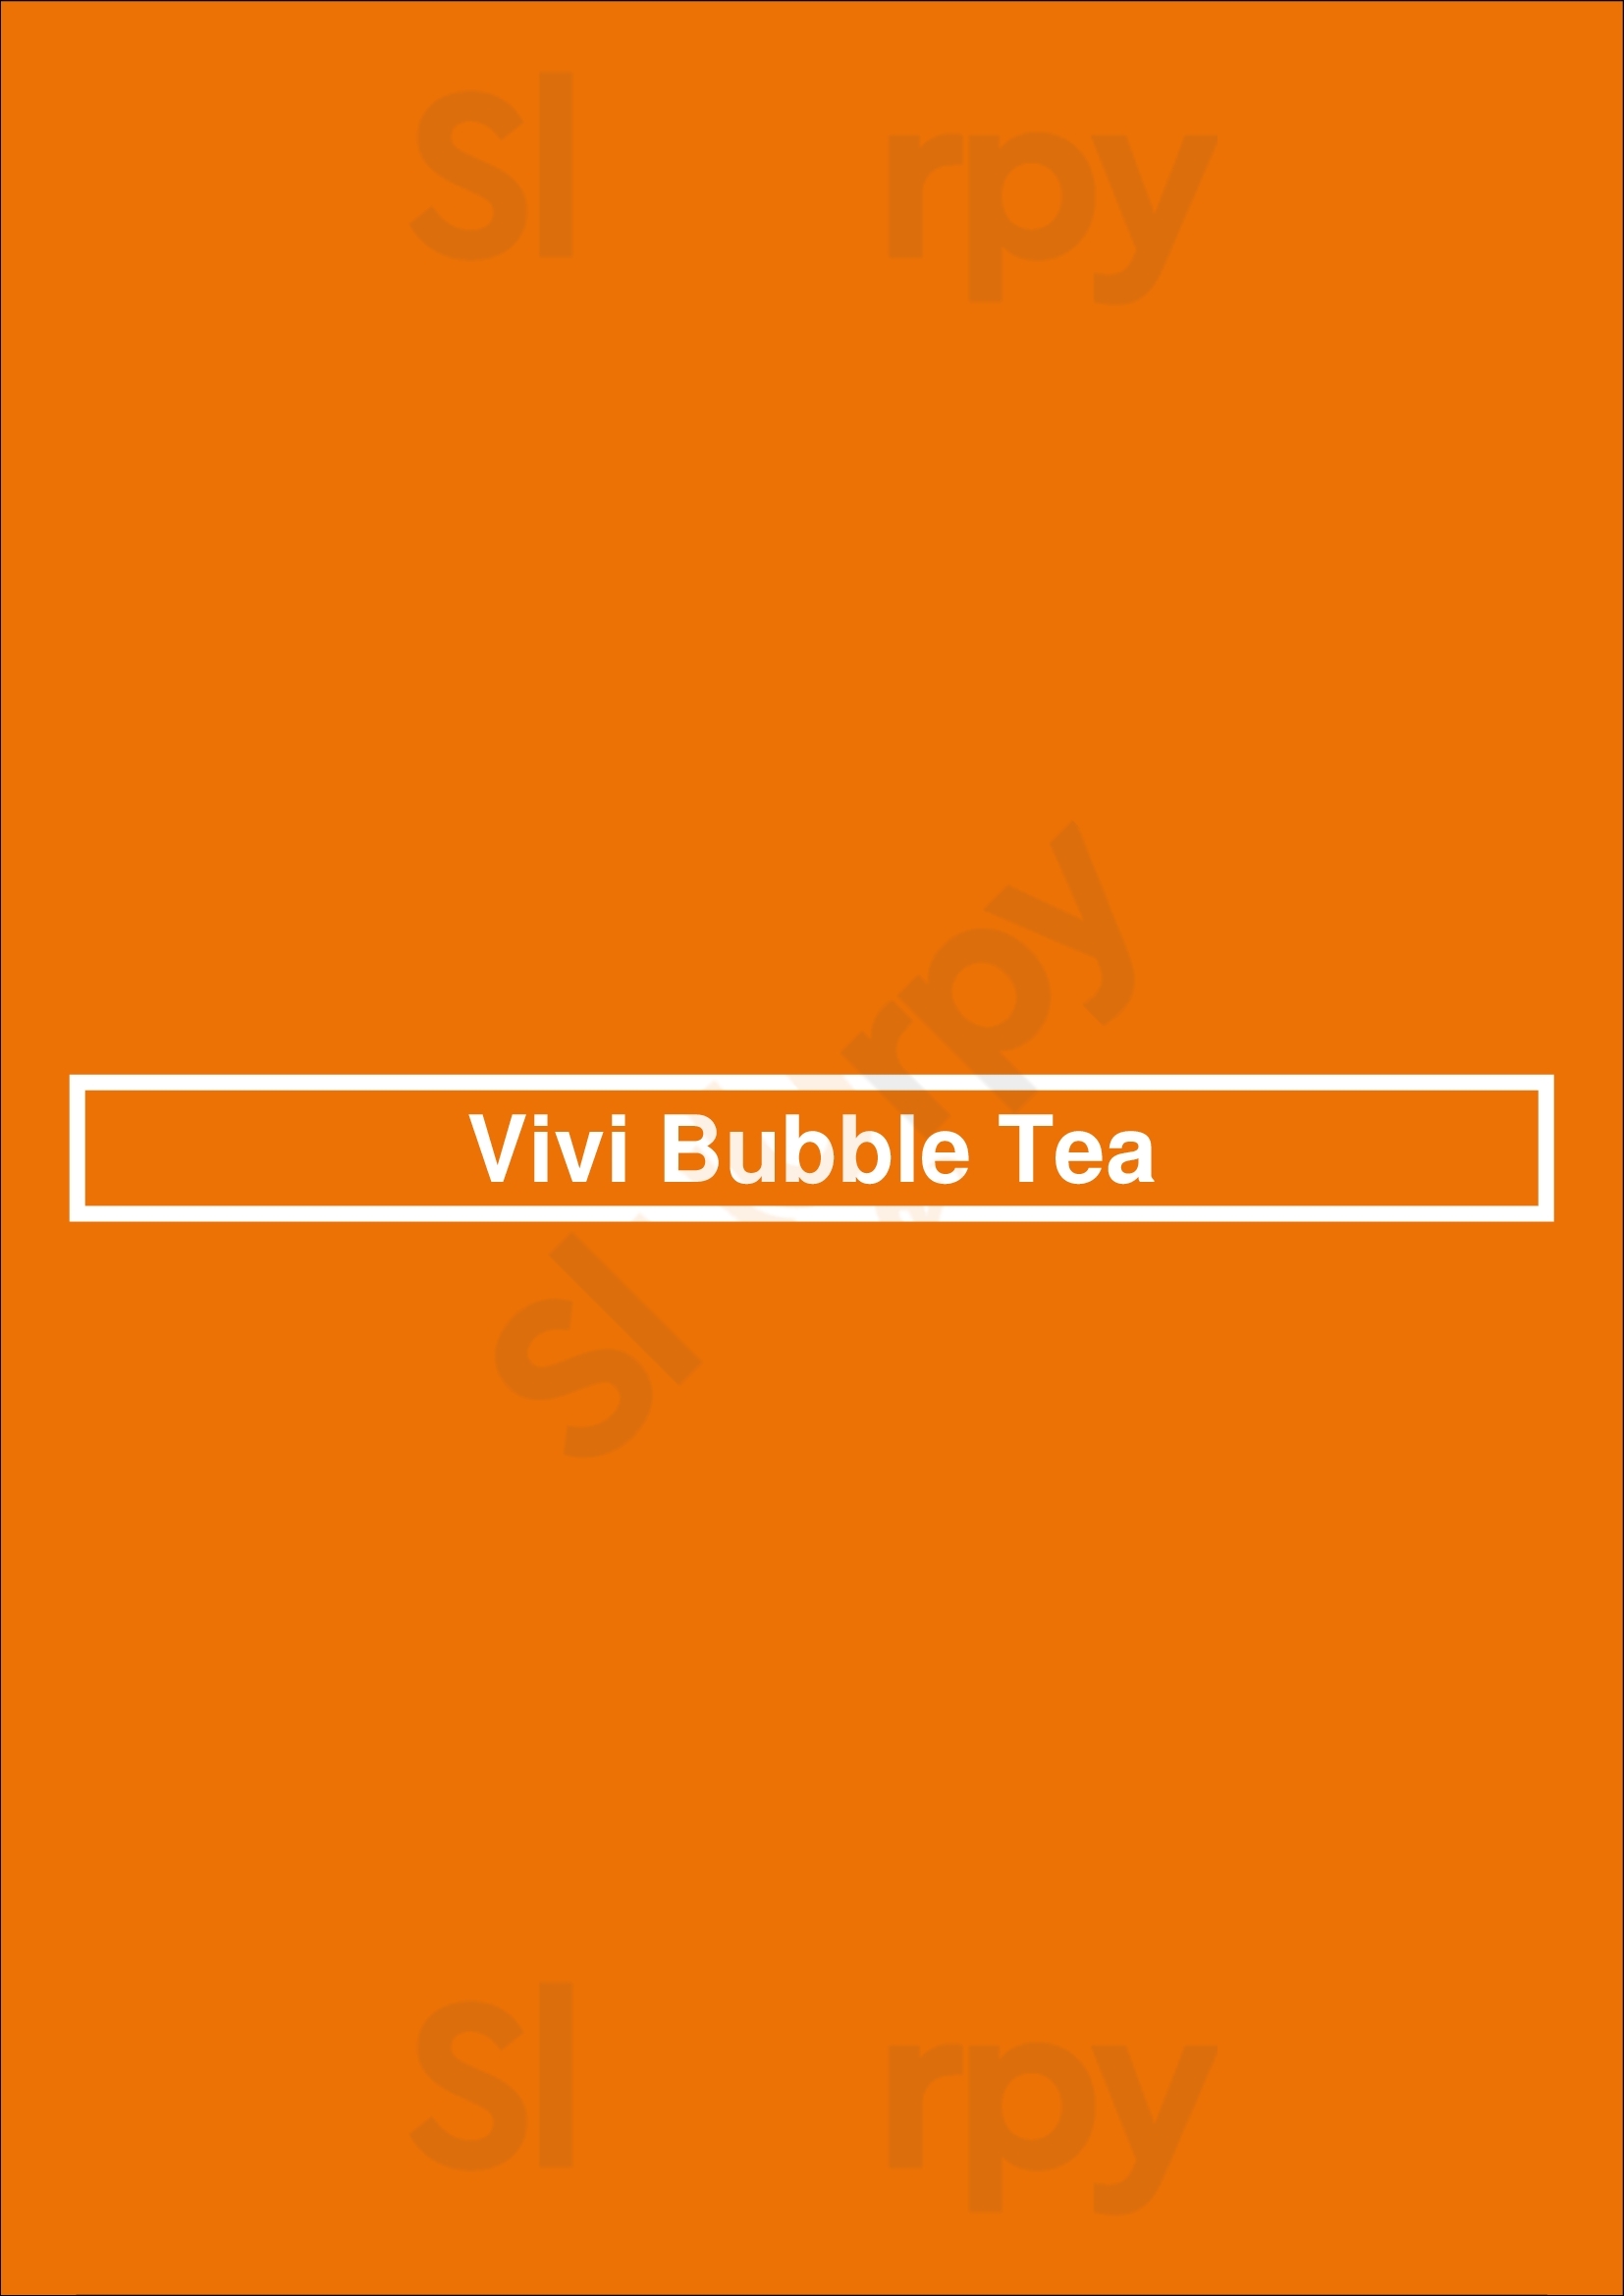 Vivi Bubble Tea New York City Menu - 1